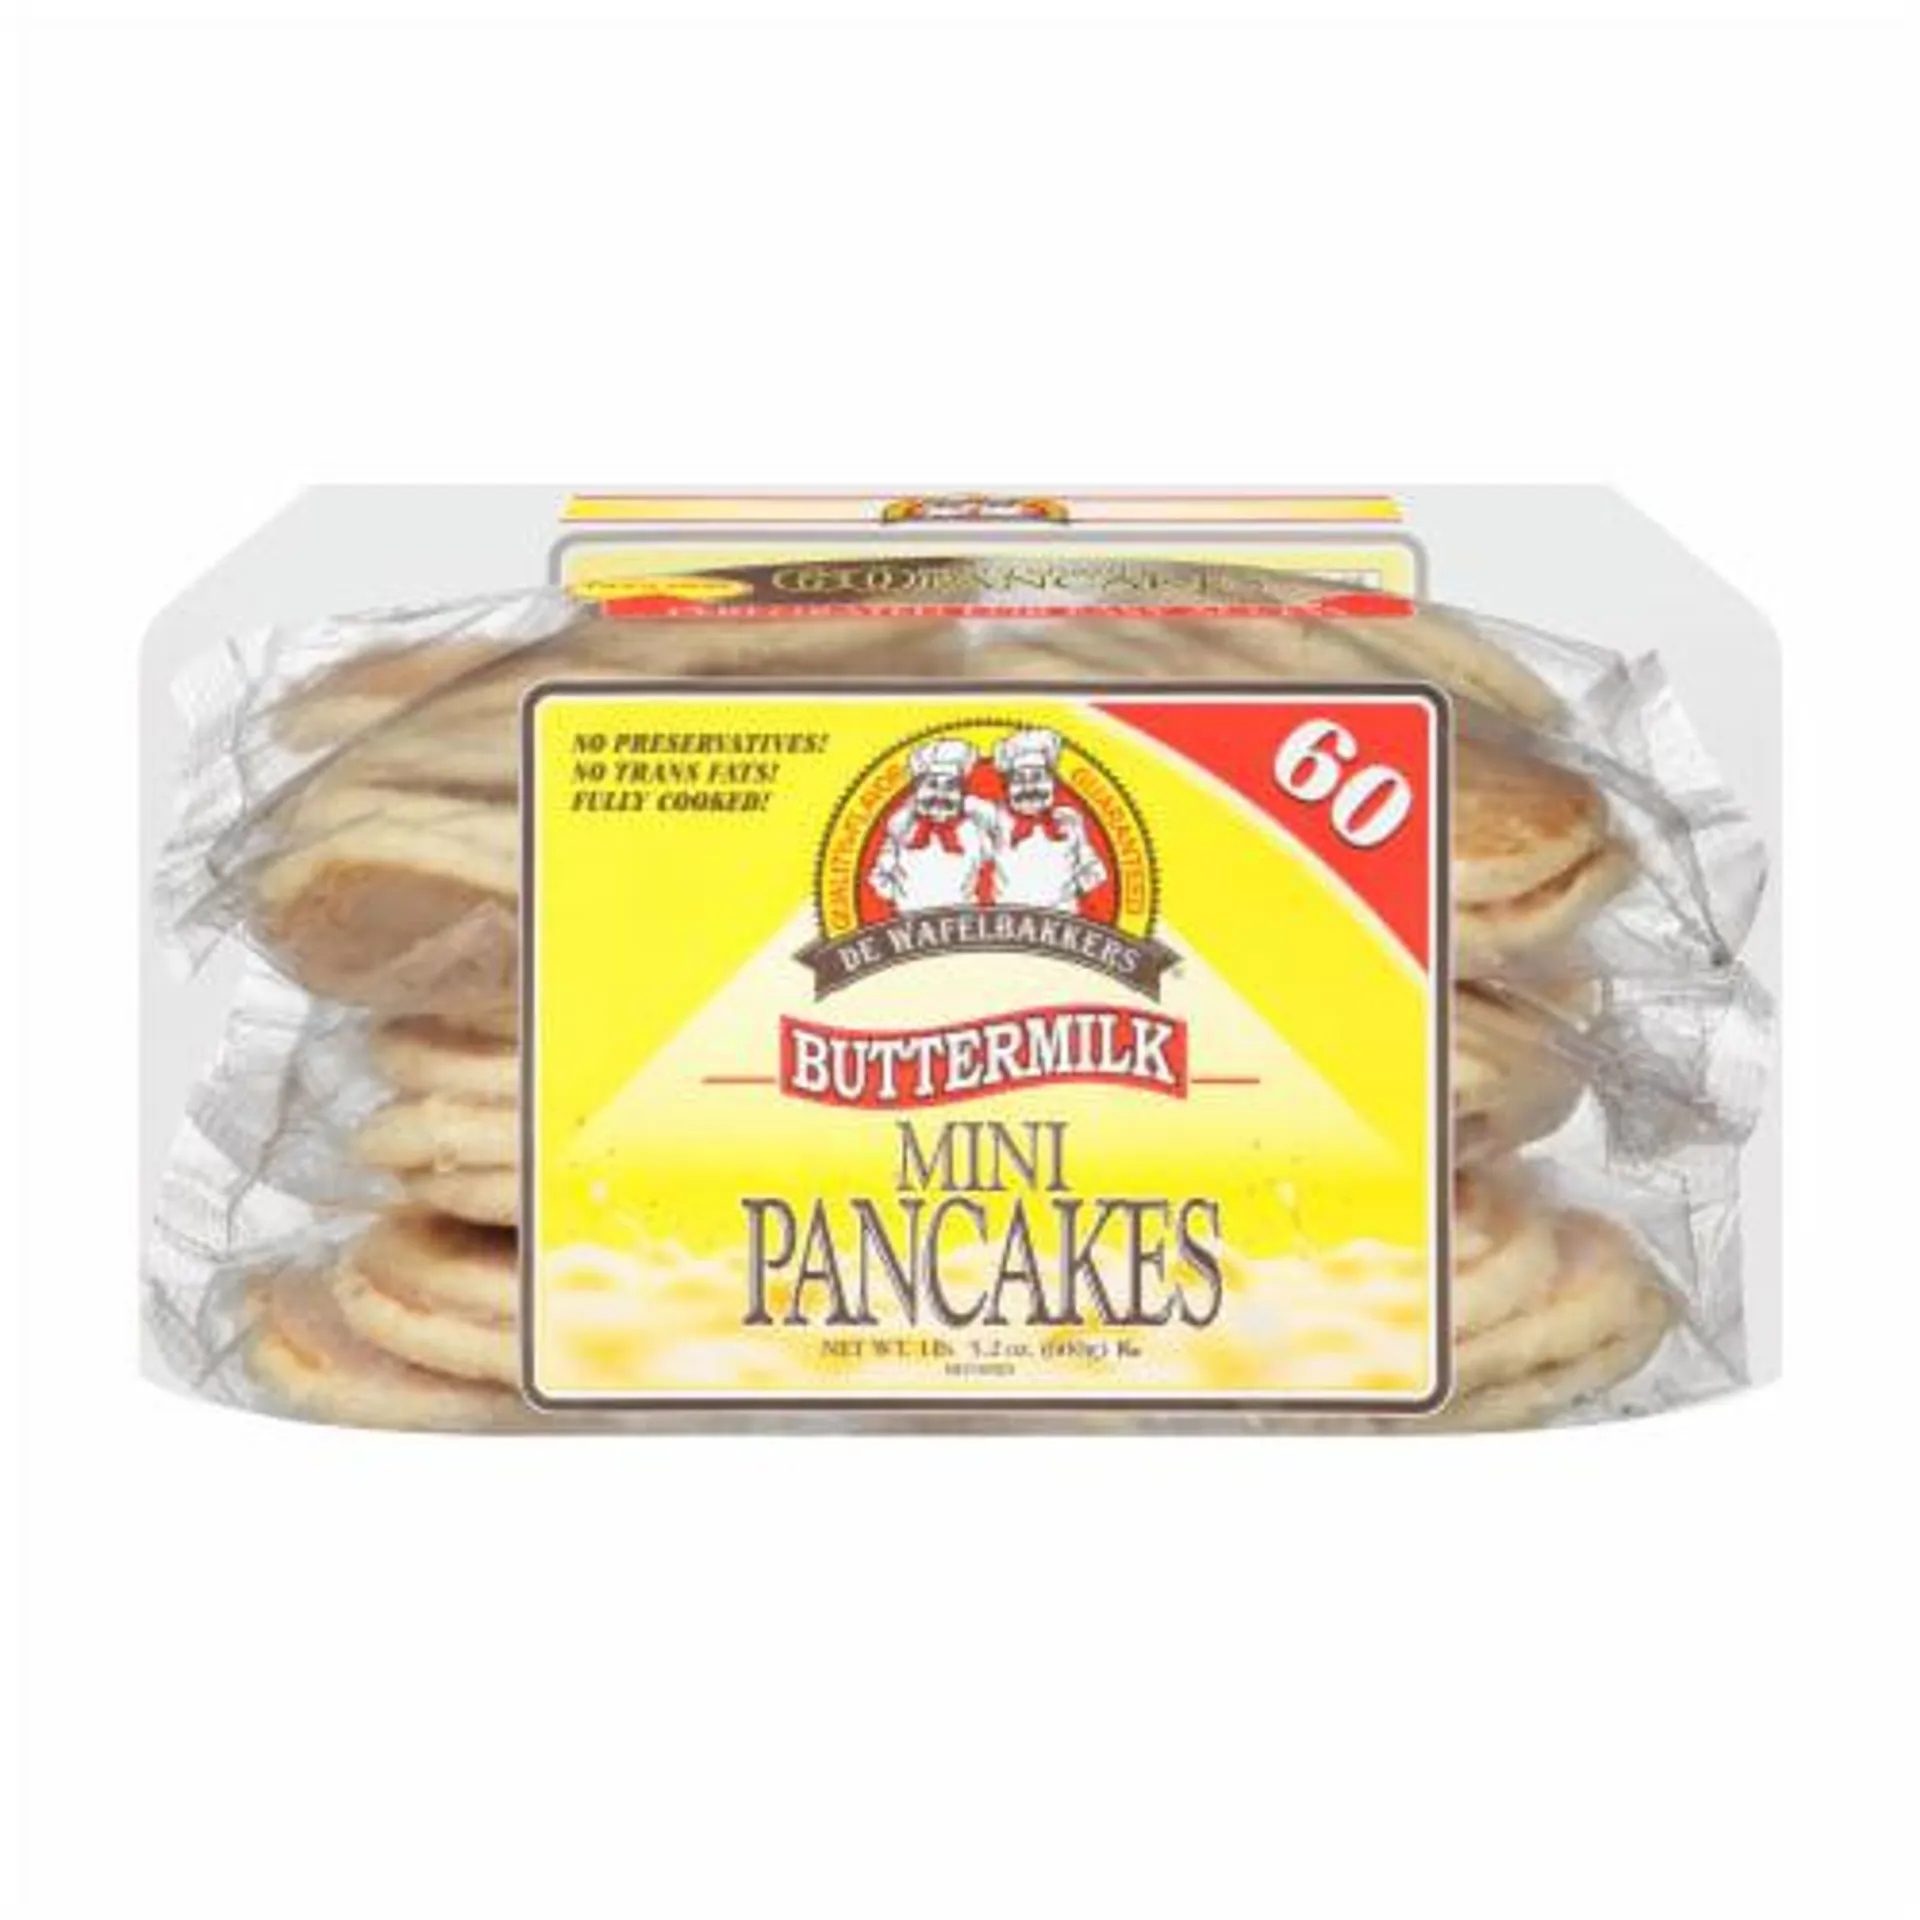 De Wafelbakkers Buttermilk Mini Pancakes